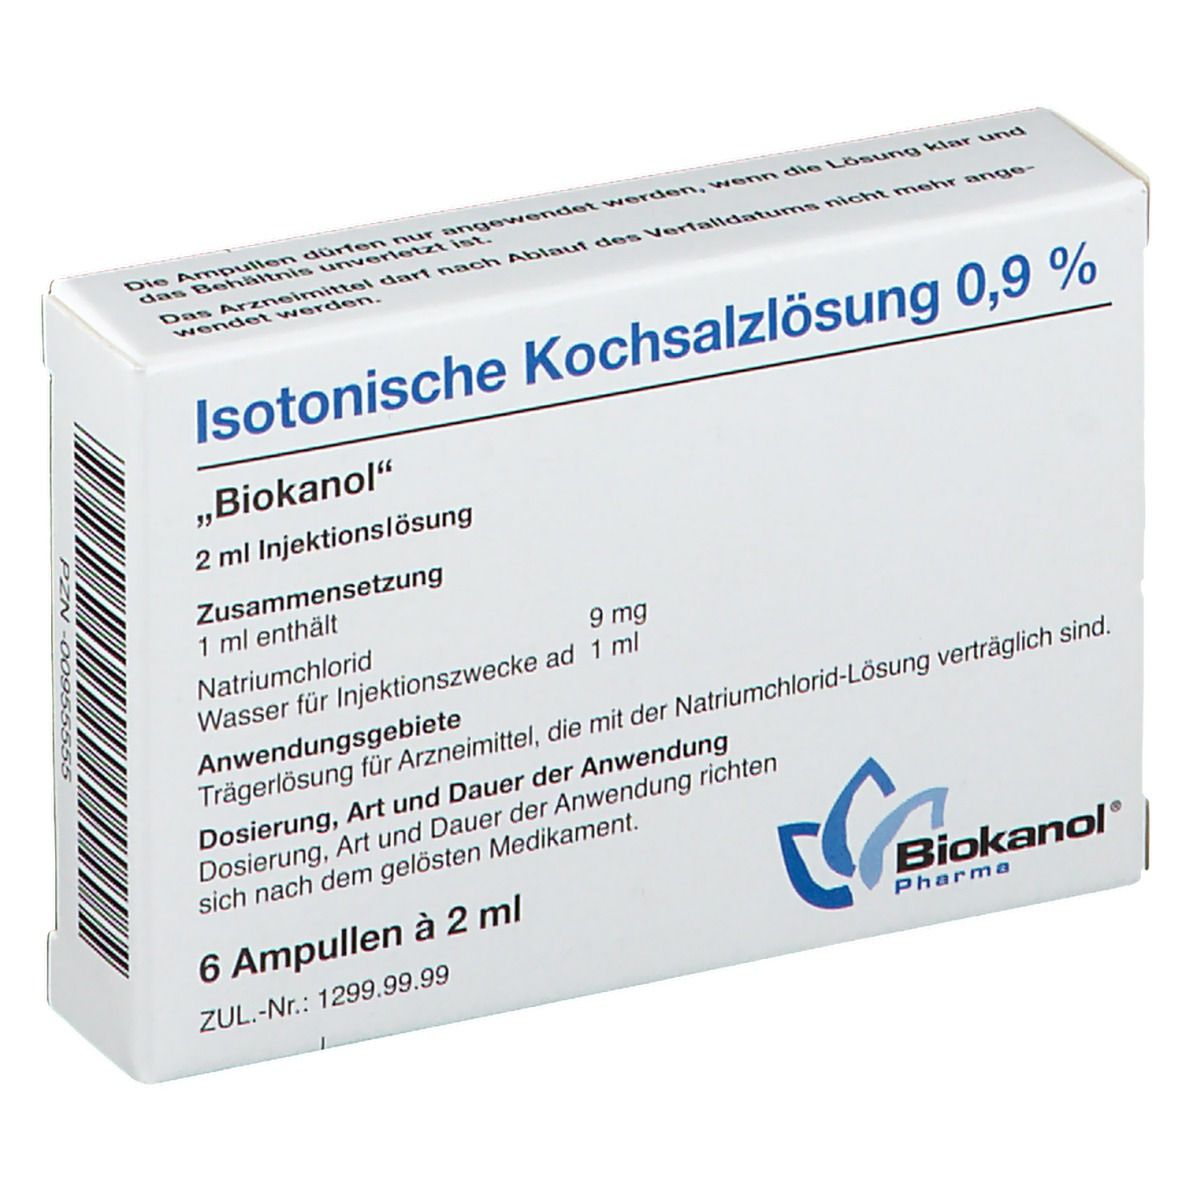 Isotonische Kochsalzlösung 0,9 % Biokanol